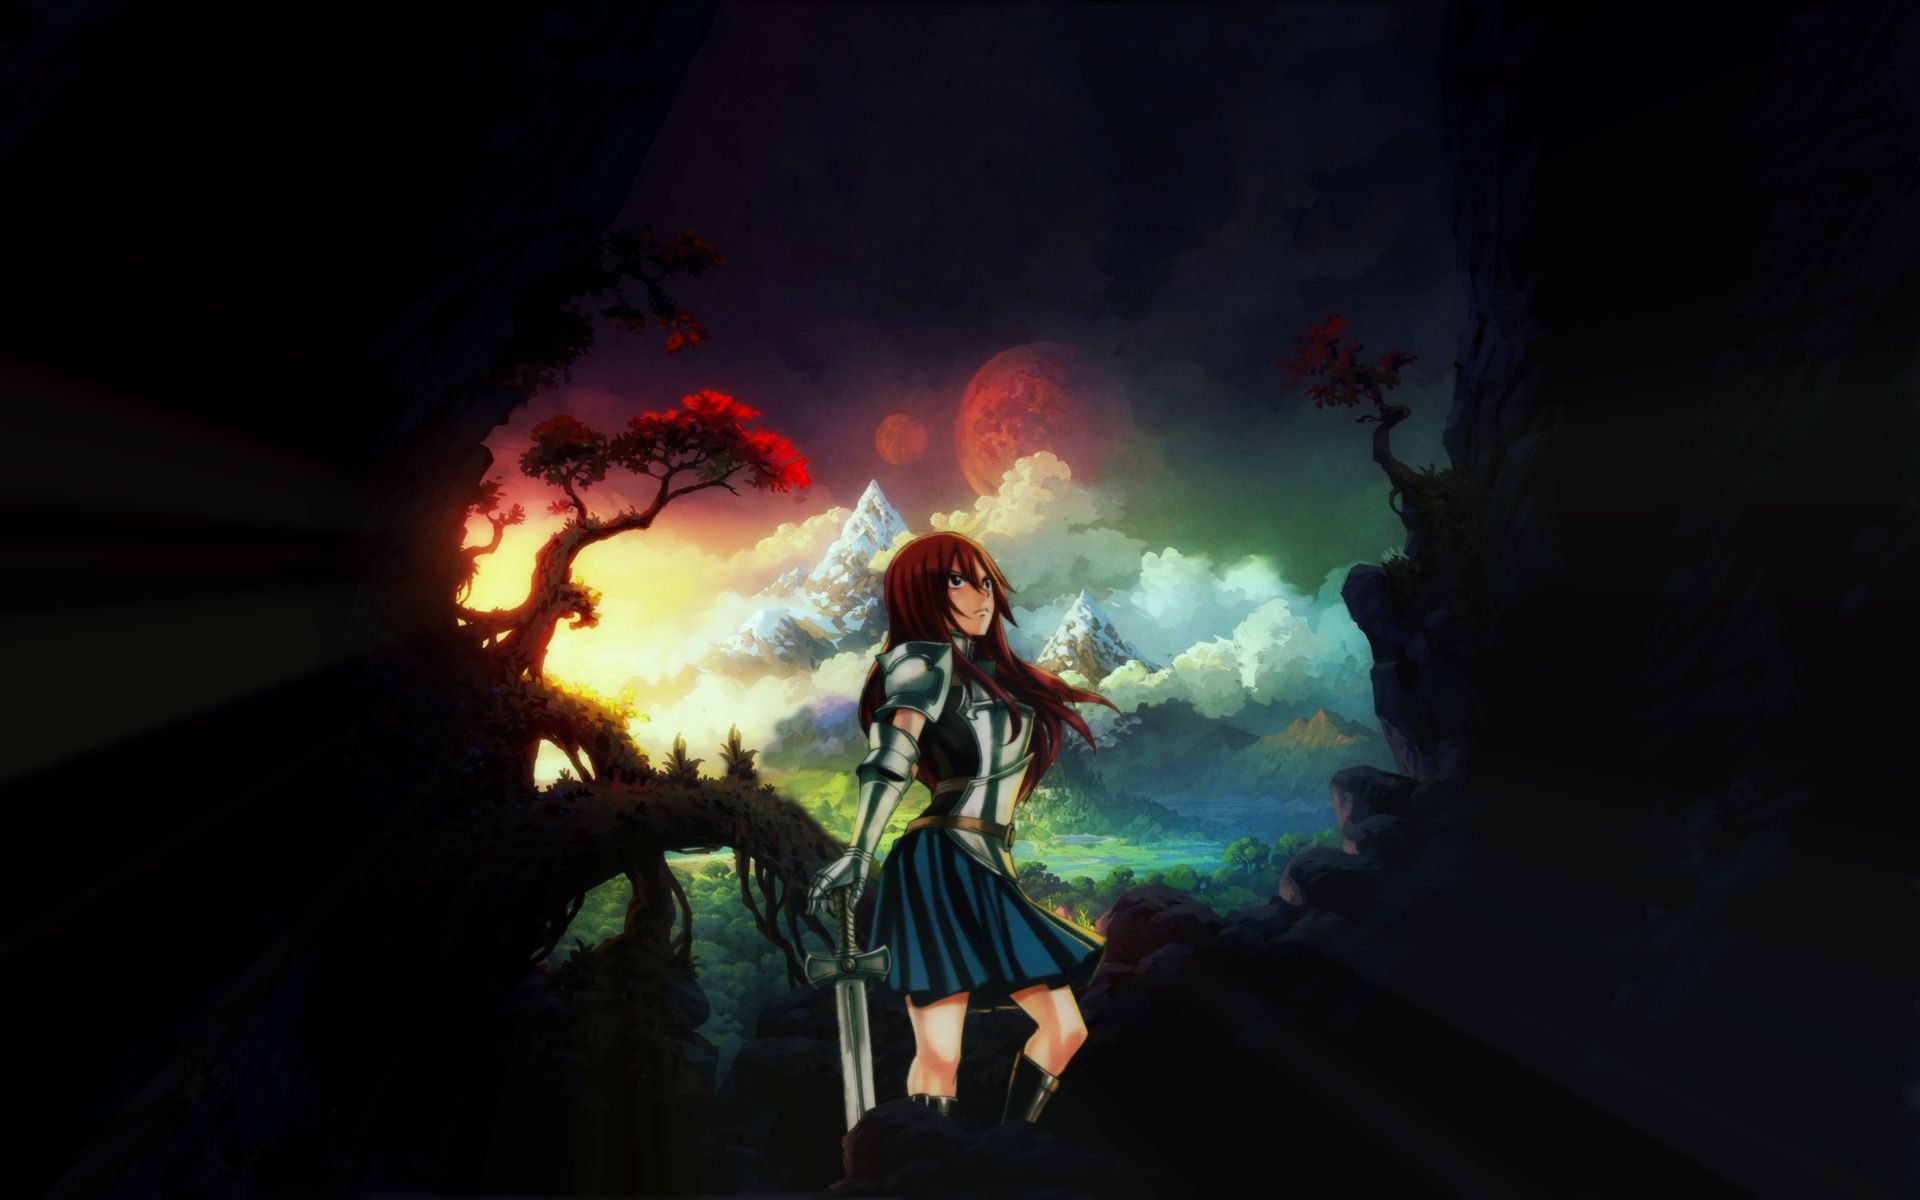 fairy tail wallpaper,sky,darkness,cg artwork,screenshot,pc game